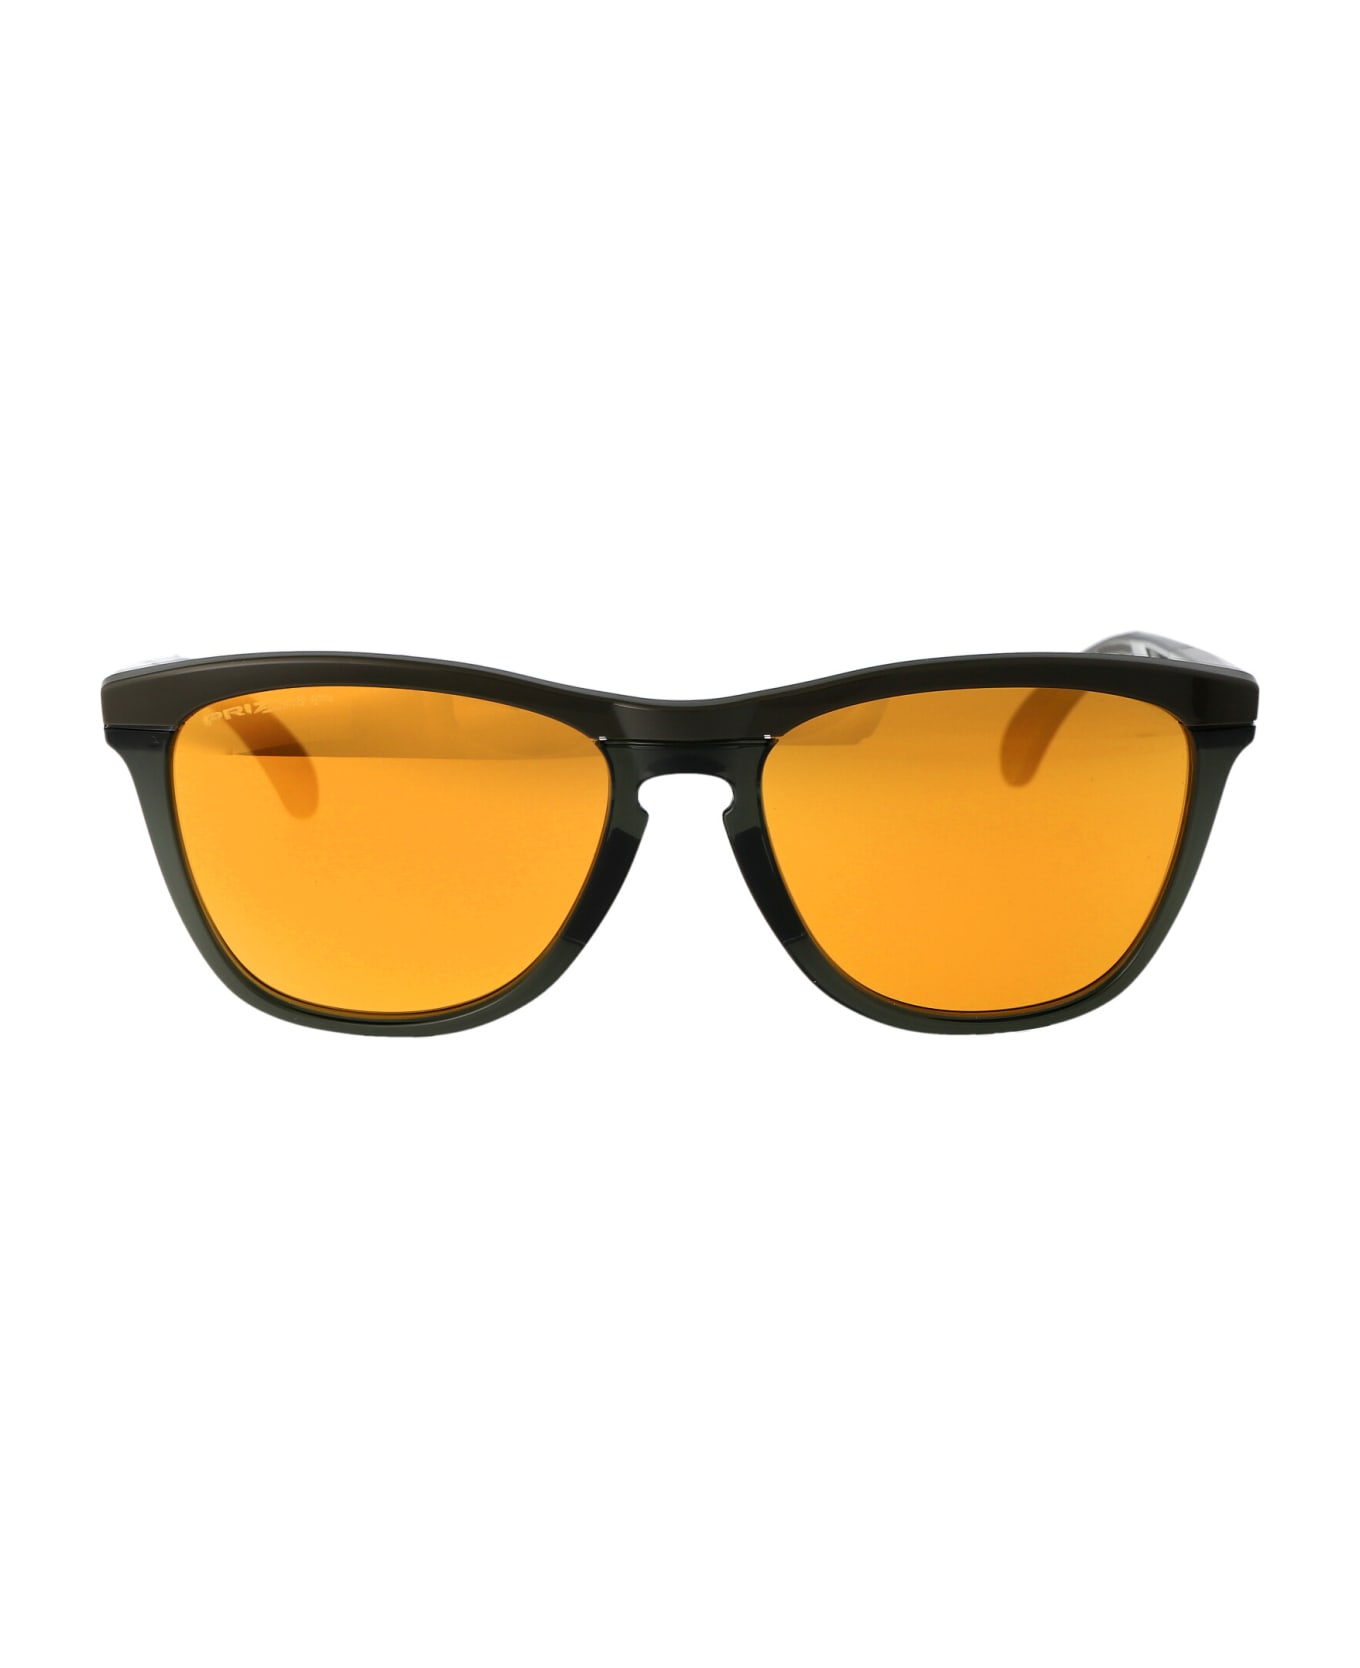 Oakley Frogskins Range Sunglasses - Black